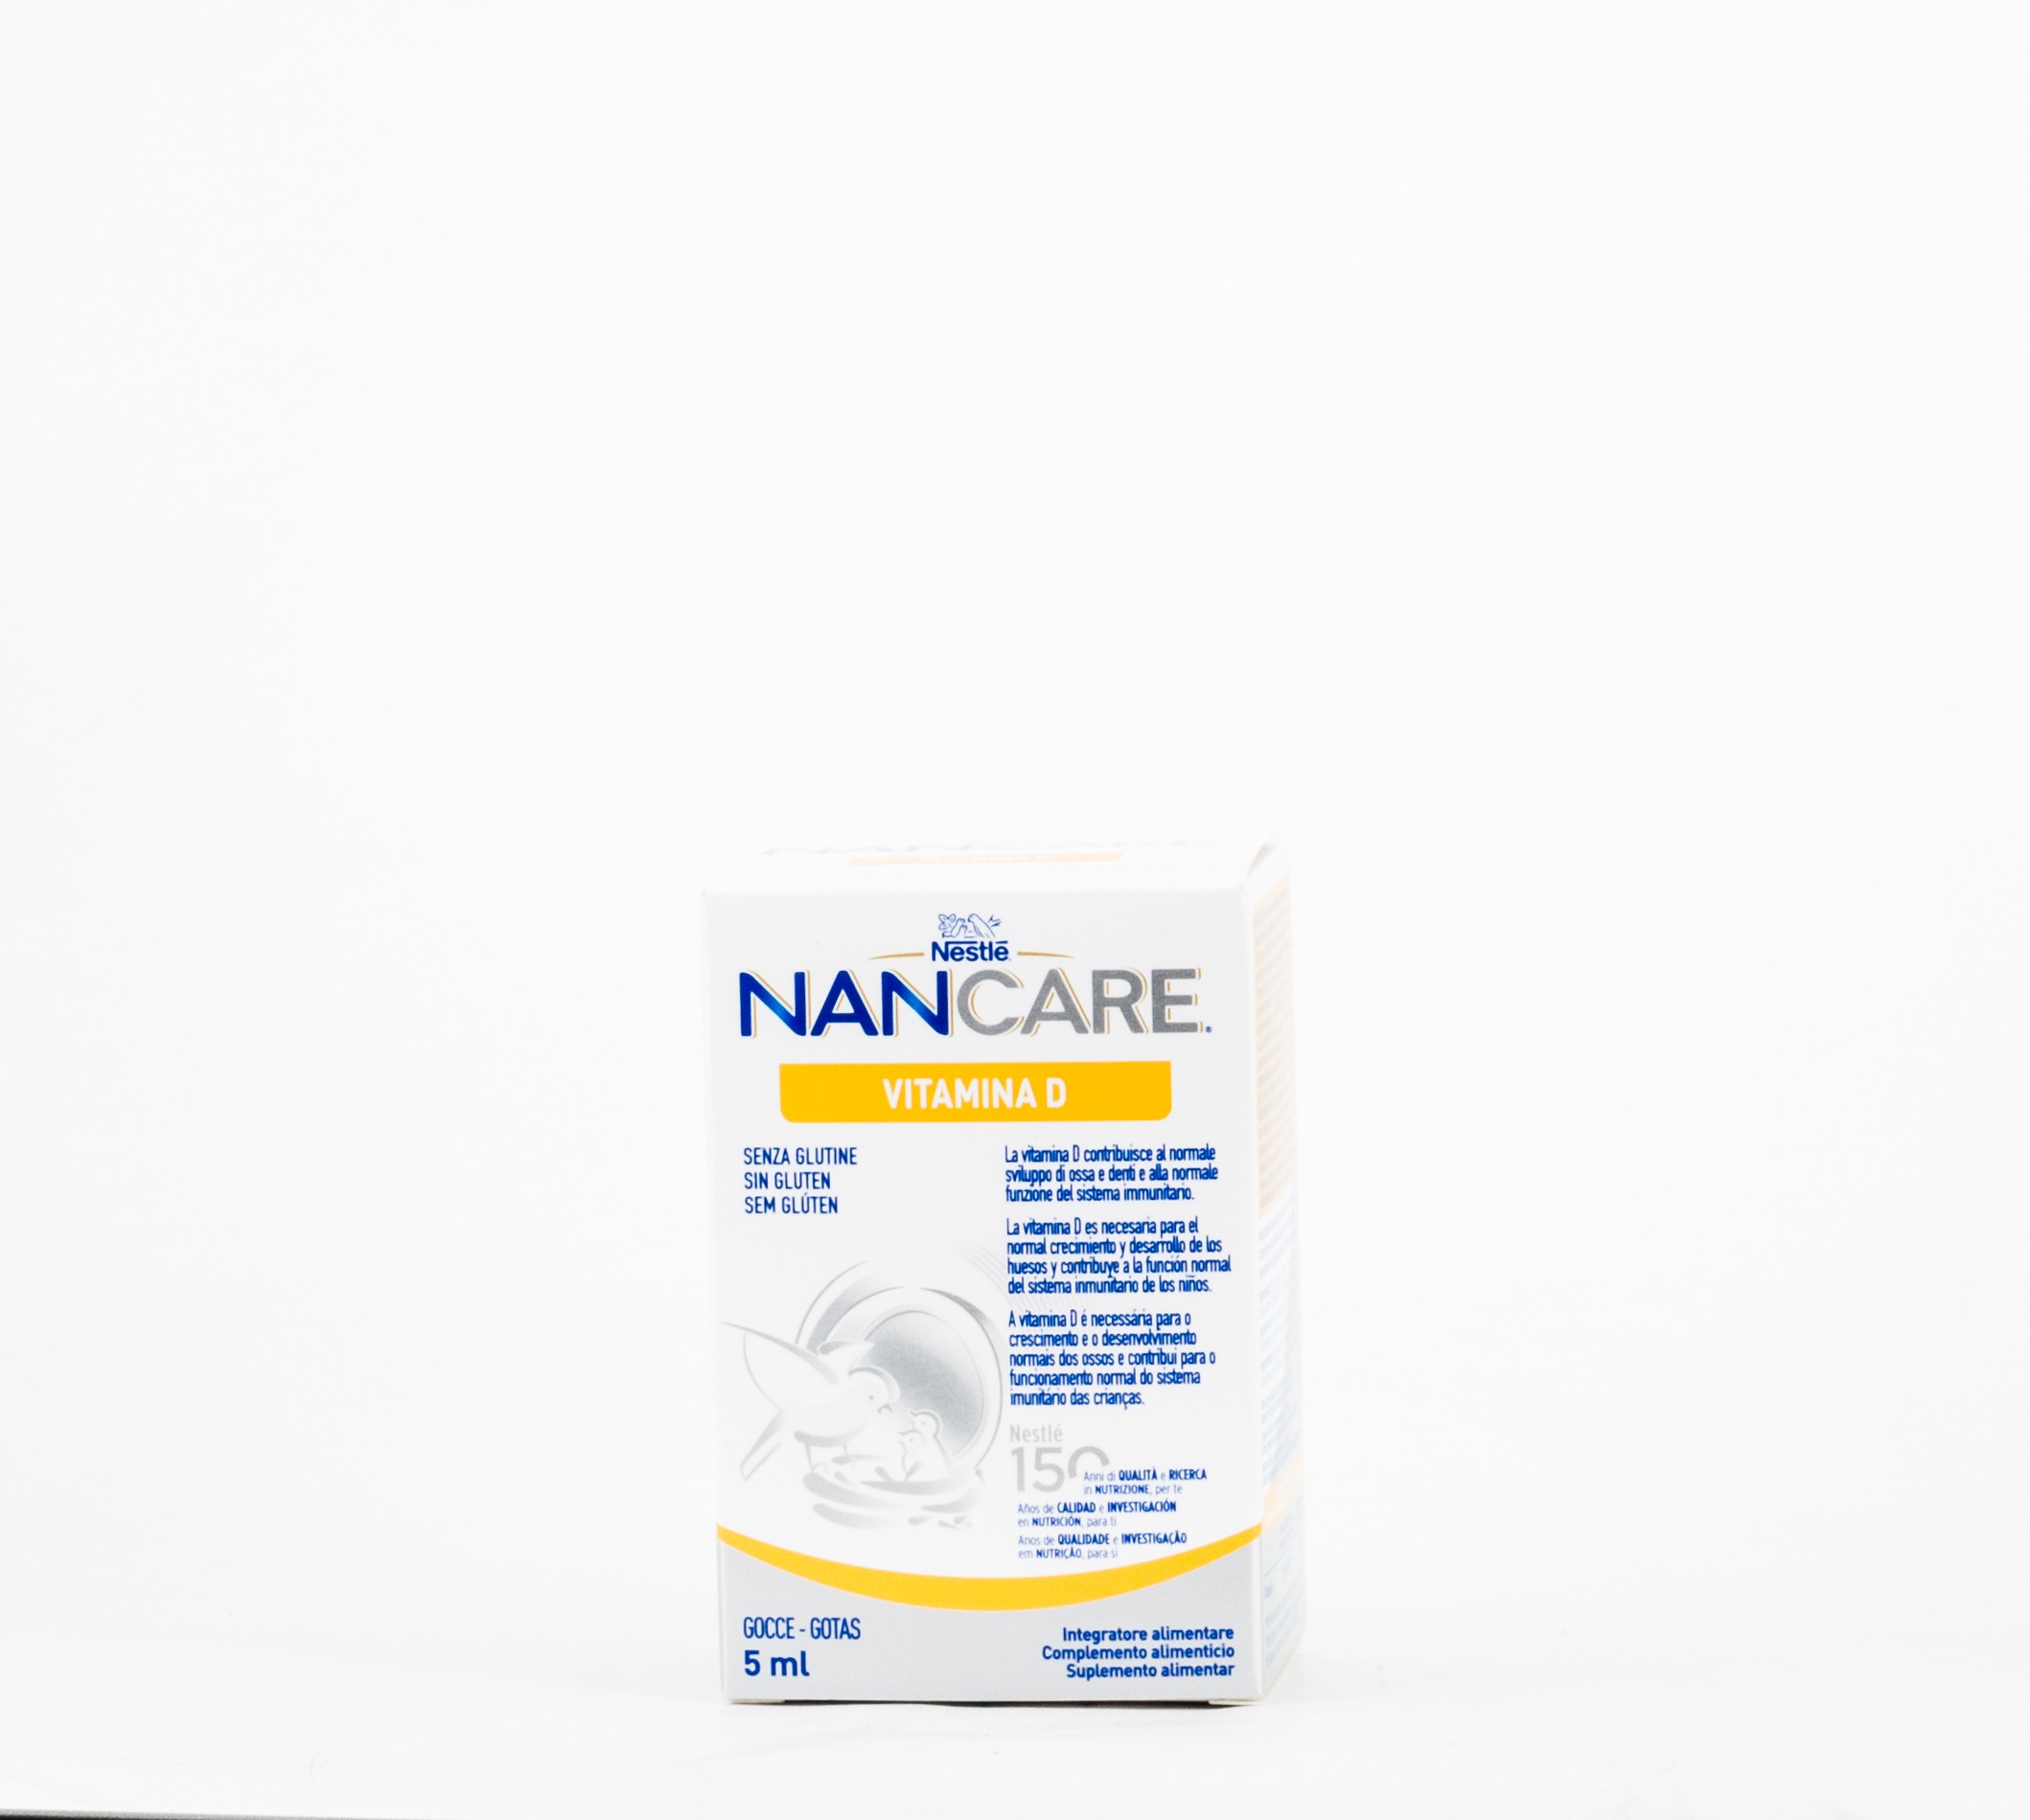 NAN Care Vitamina D Gotas, 5ml.